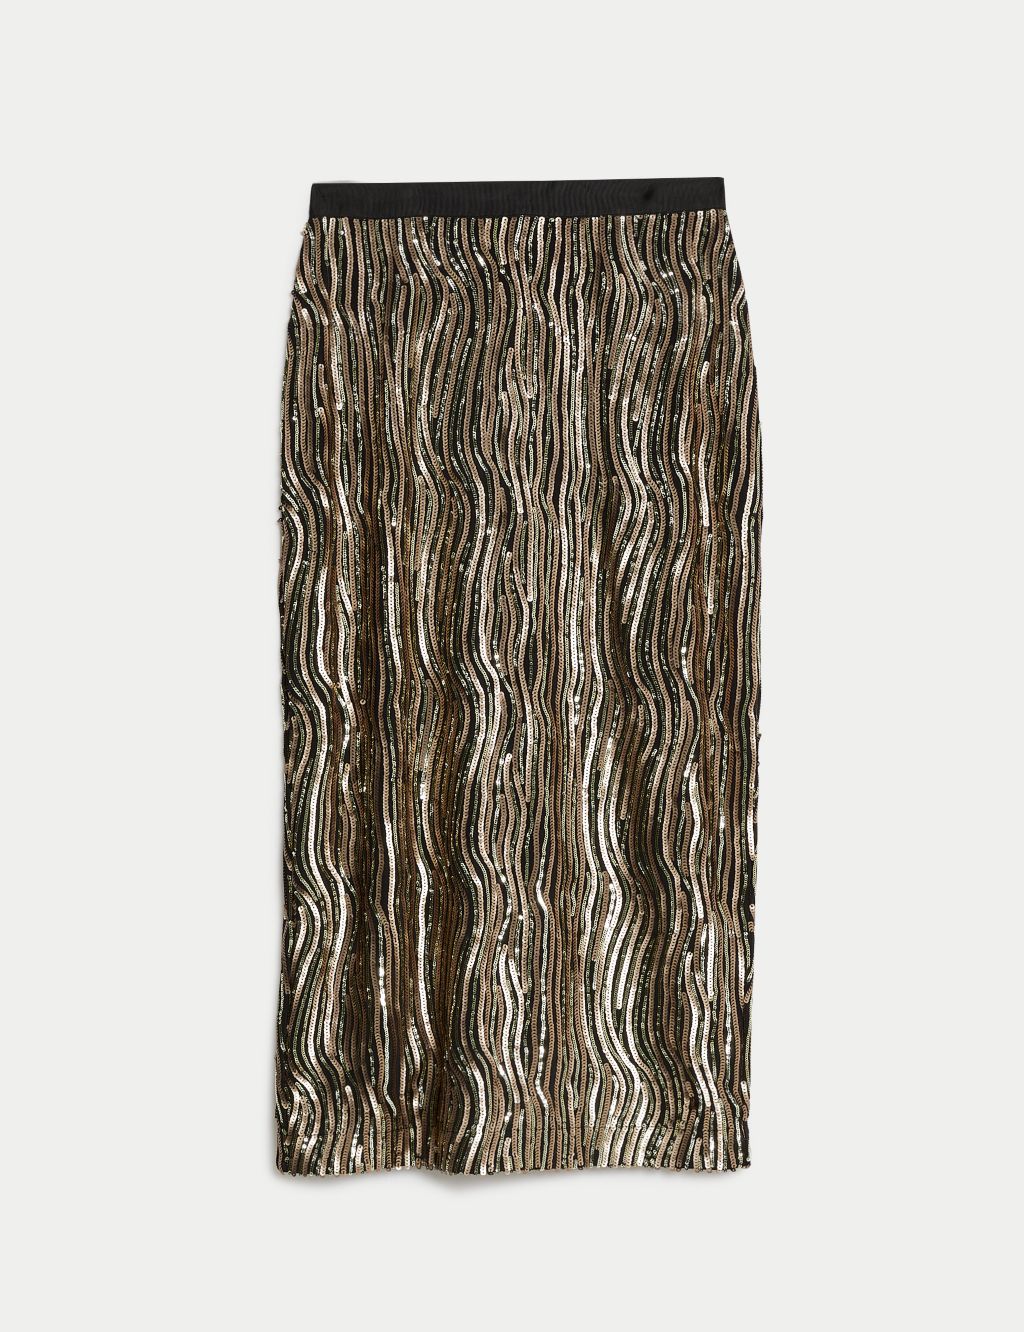 Sequin Midaxi Column Skirt image 2